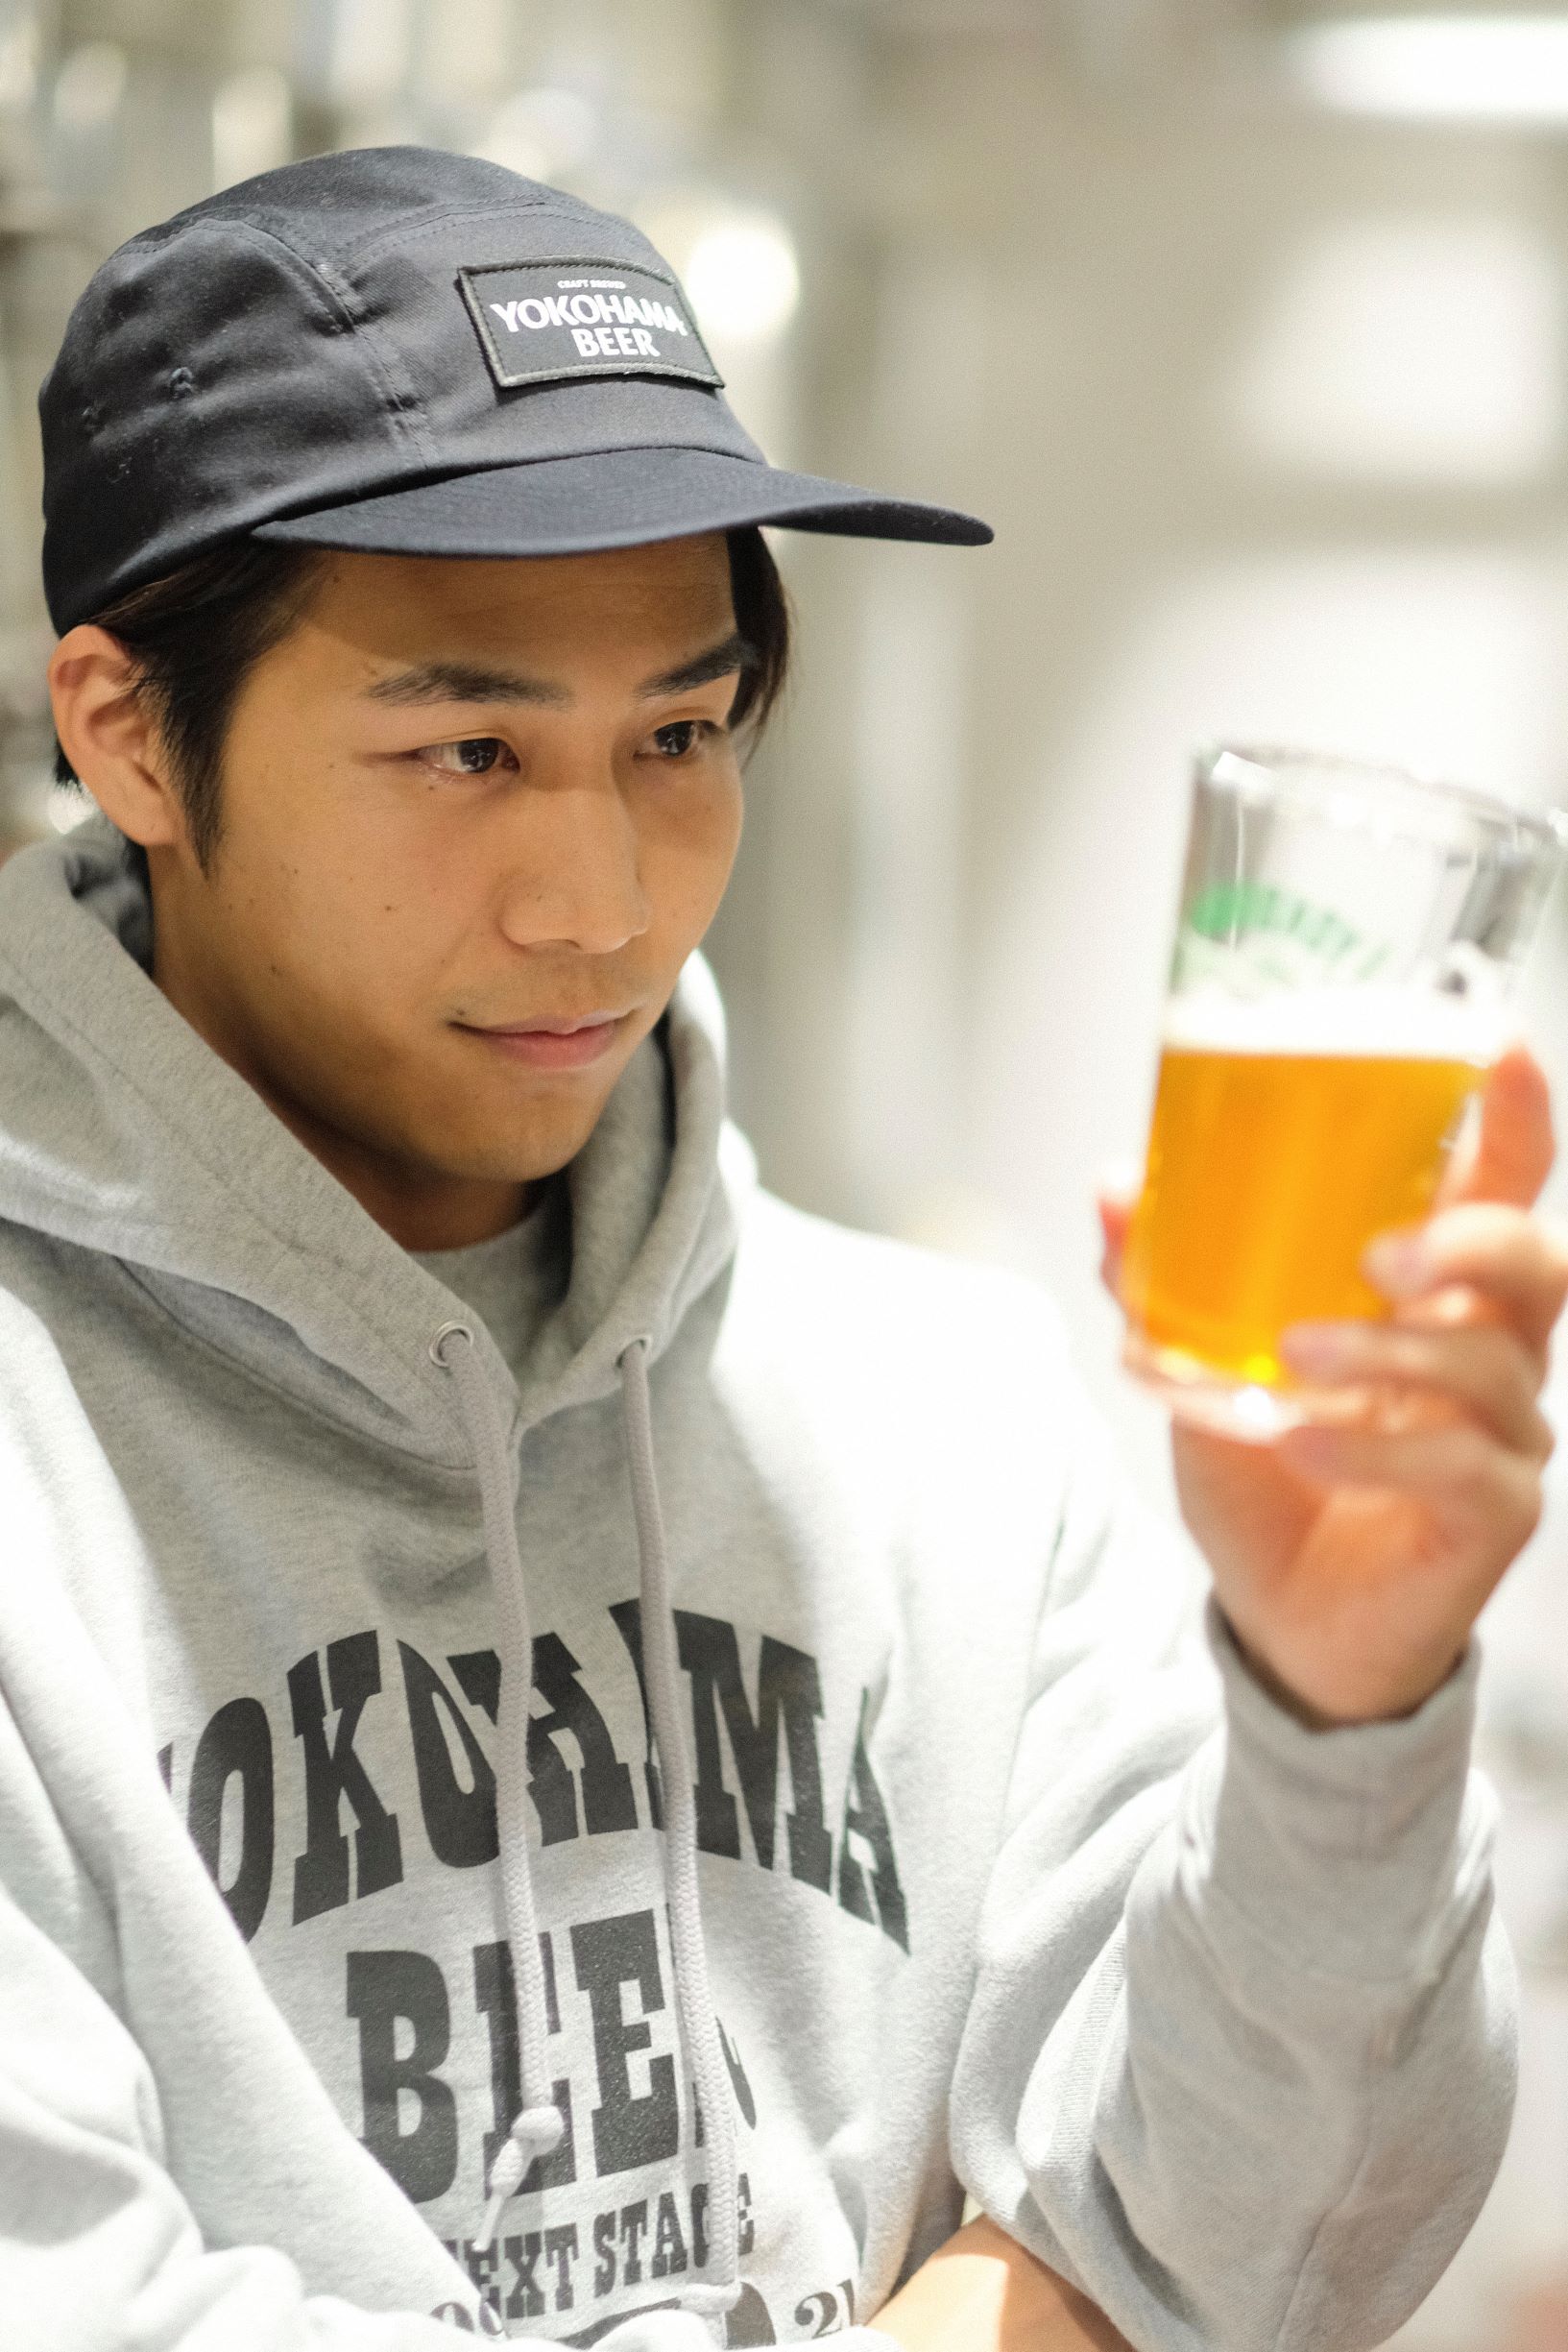 YOKOHAMA BEERオリジナルロゴワッペン付き【Camp cap】 横浜ビール 通販サイト